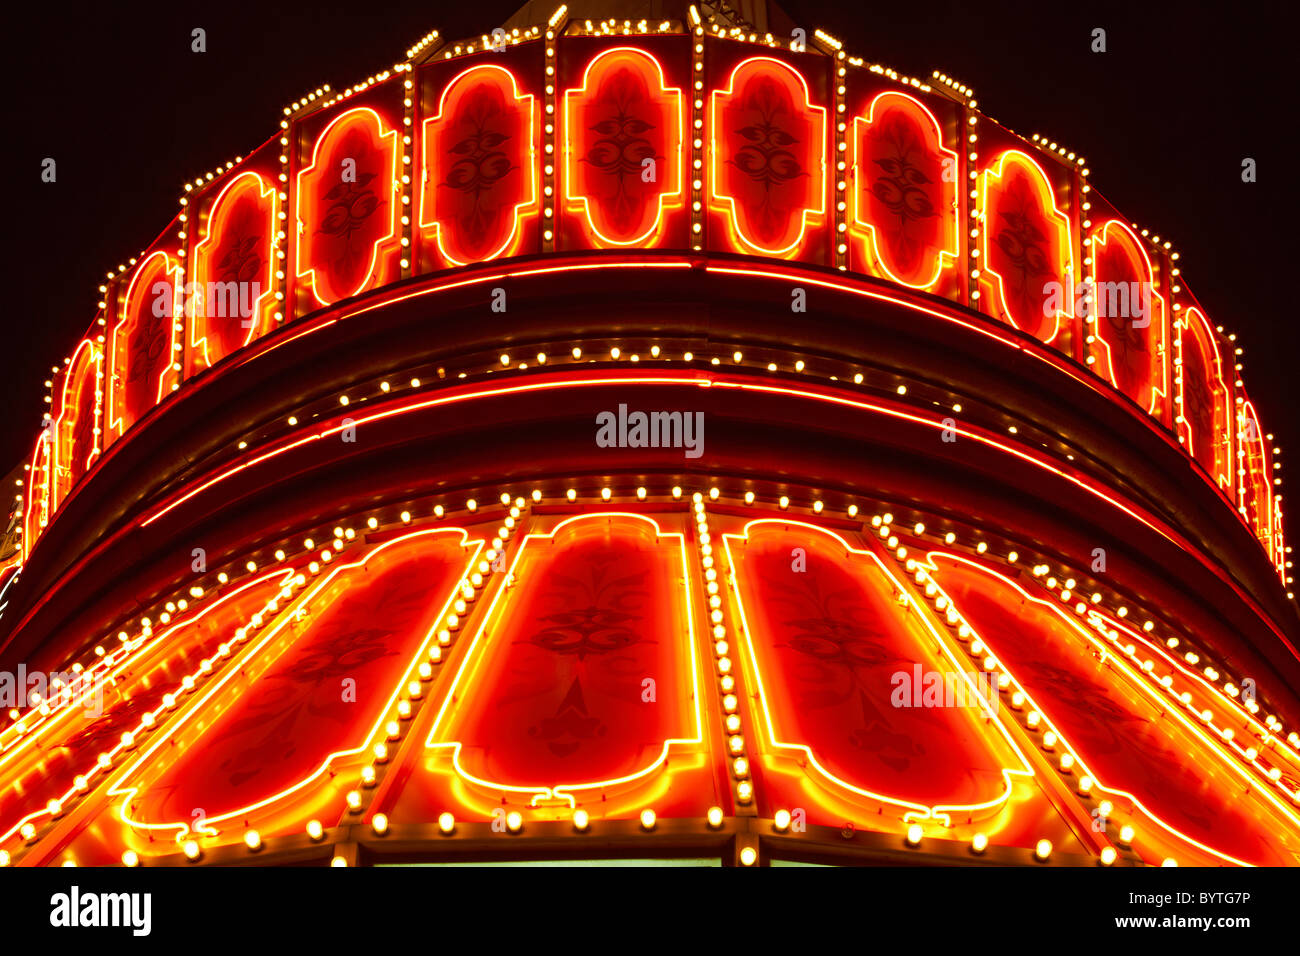 Red neon sign - Hotel Casino Neon Lights - Night Scene - Las Vegas Stock Photo